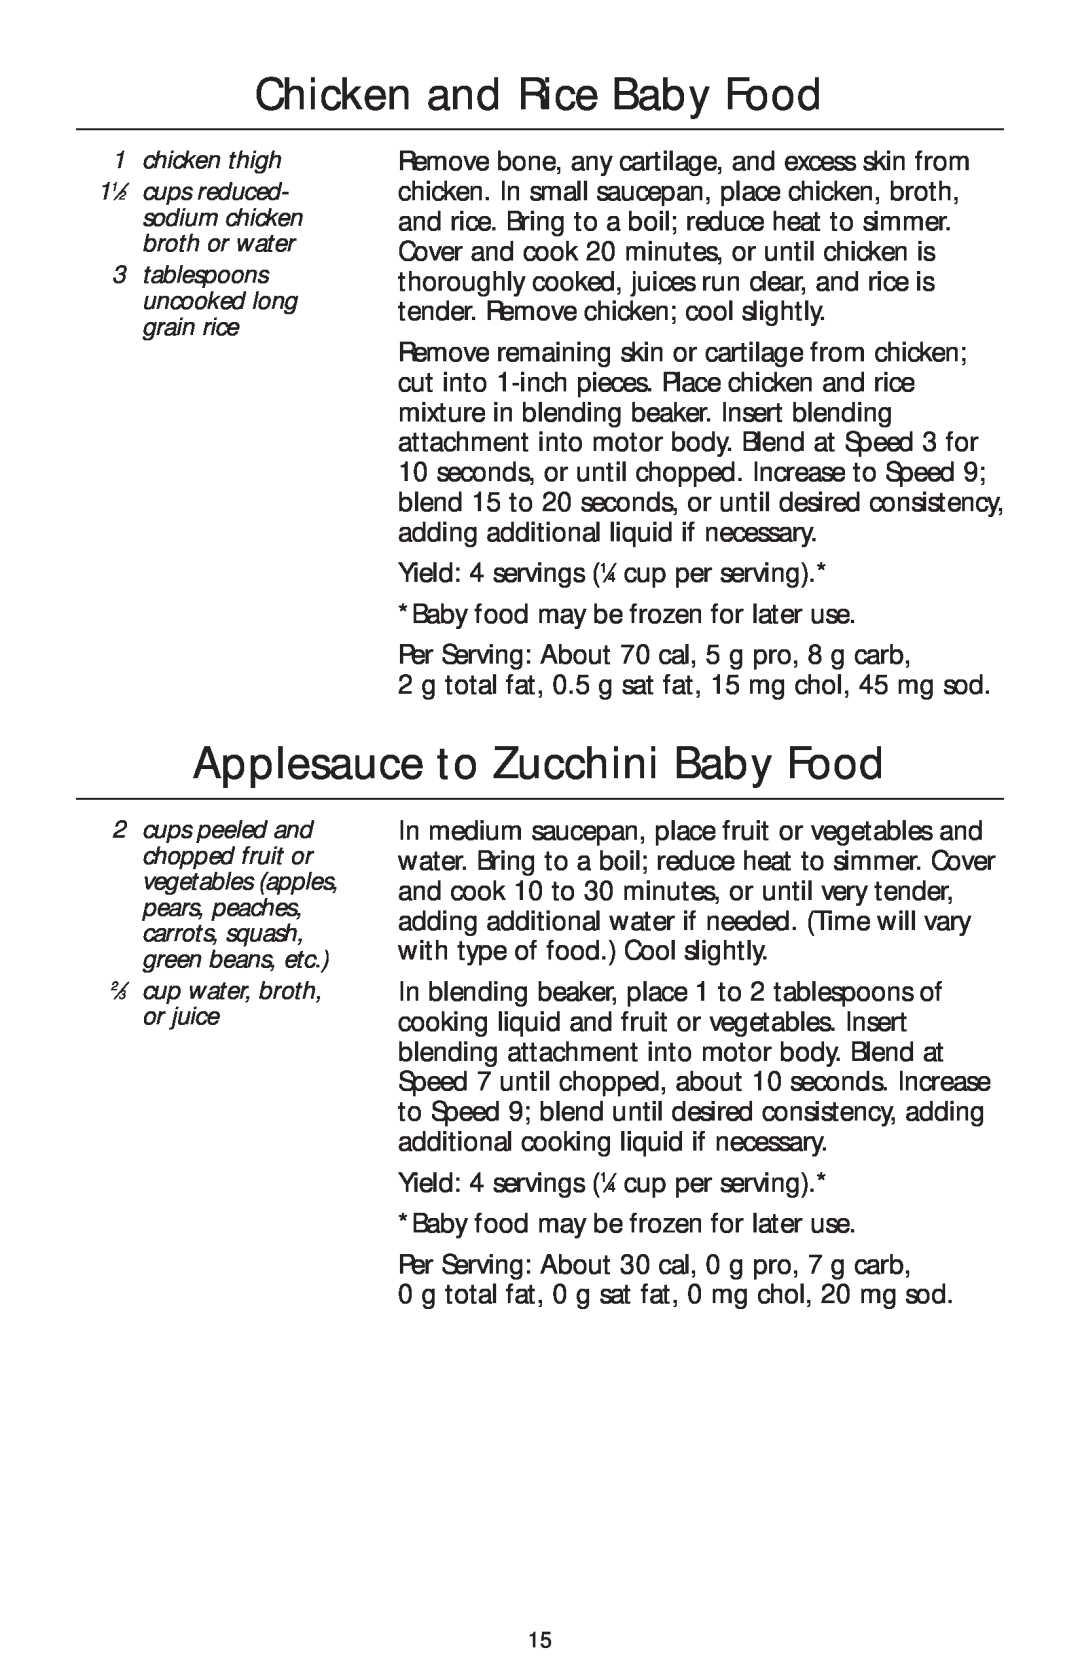 KitchenAid KHB300, KHB100, KHB200 manual Chicken and Rice Baby Food, Applesauce to Zucchini Baby Food, chicken thigh 